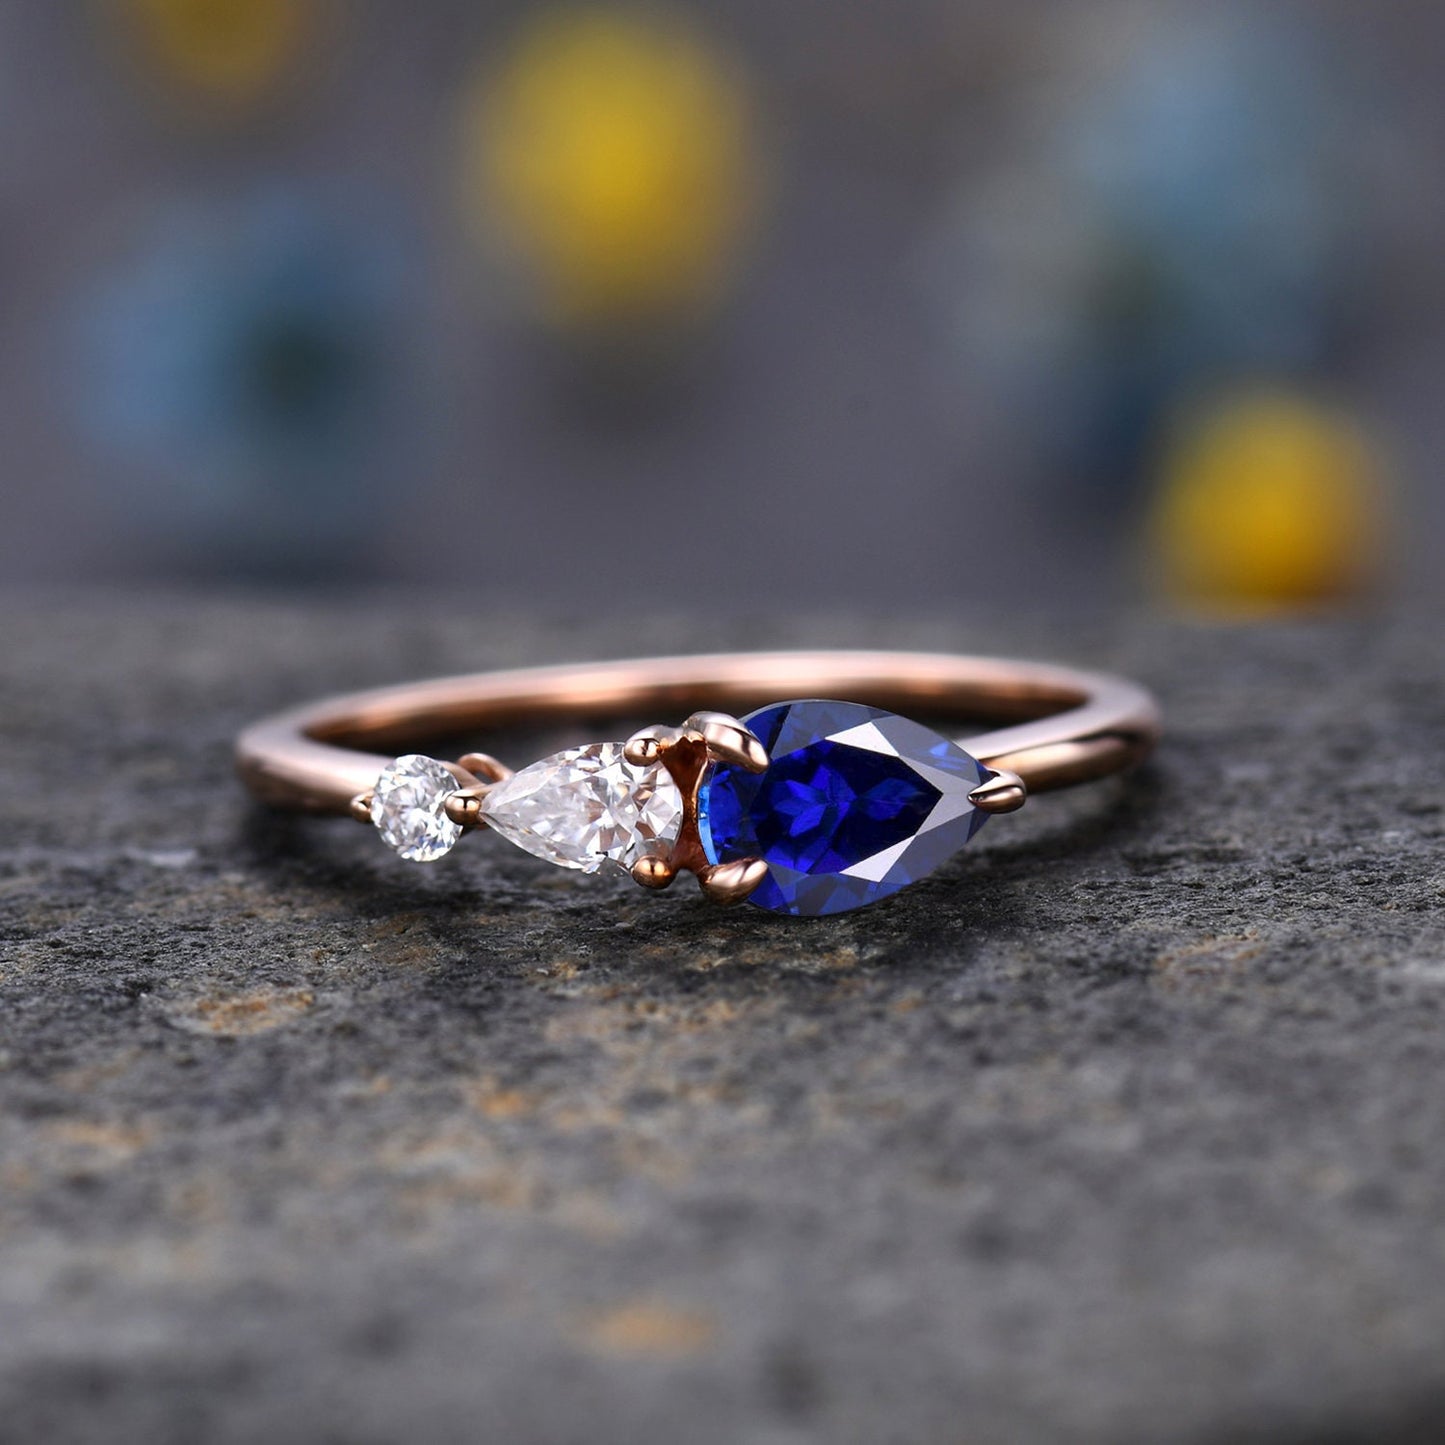 Vintage Yellow Citrine Engagement Ring,Pear Cut Gems,Art Deco Moissanite Wedding Band,3 Stone Unique Women Bridal Promise Ring,14k Rose gold